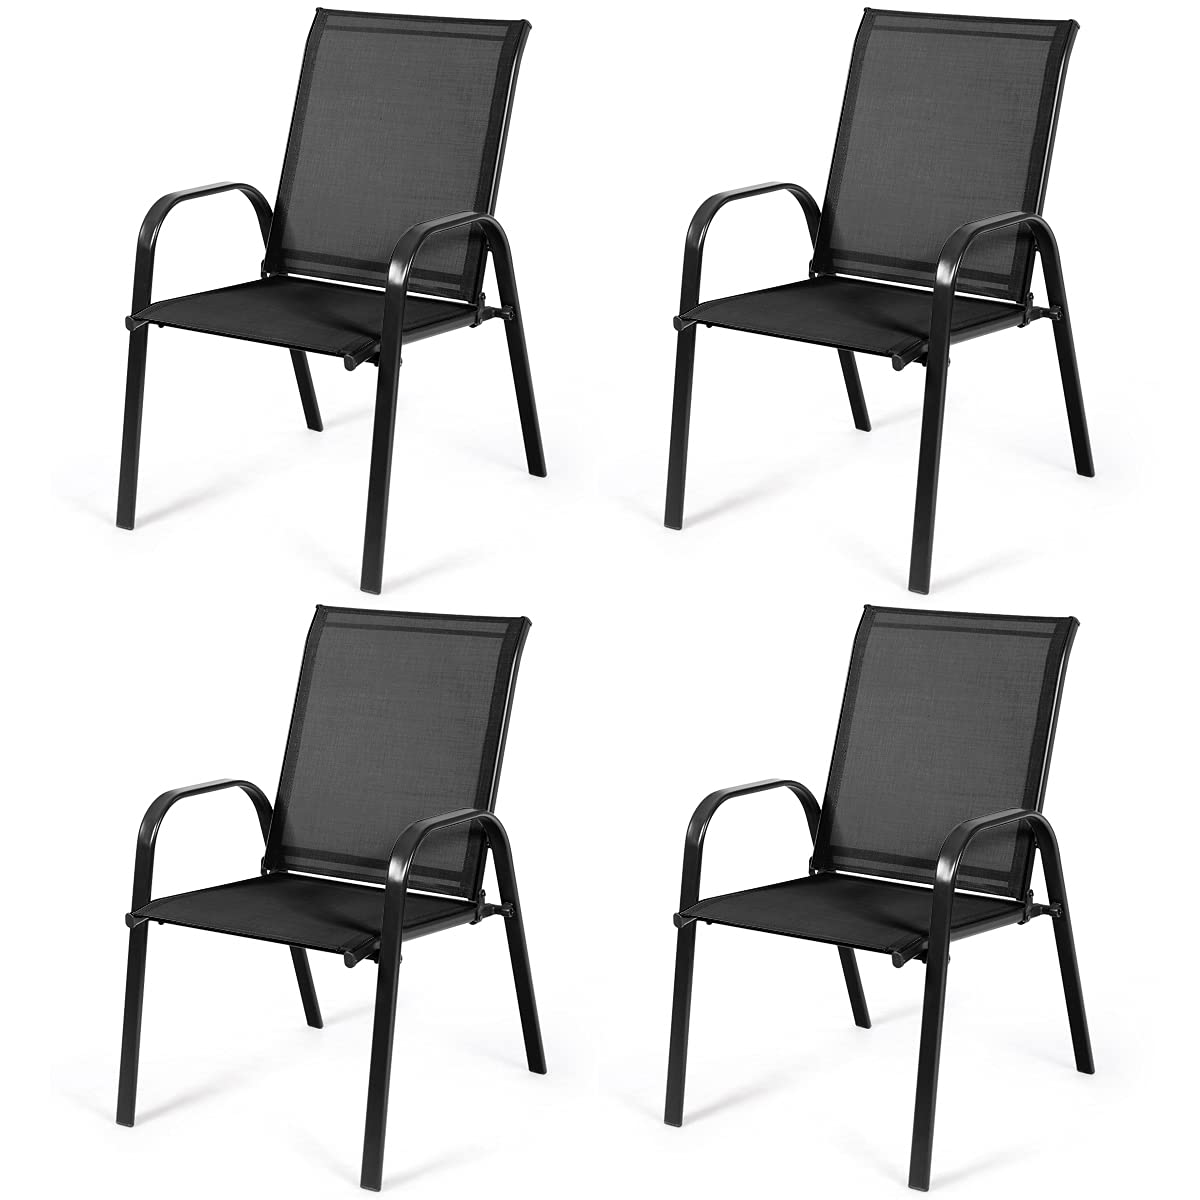 Giantex 4 Piece Patio Chairs